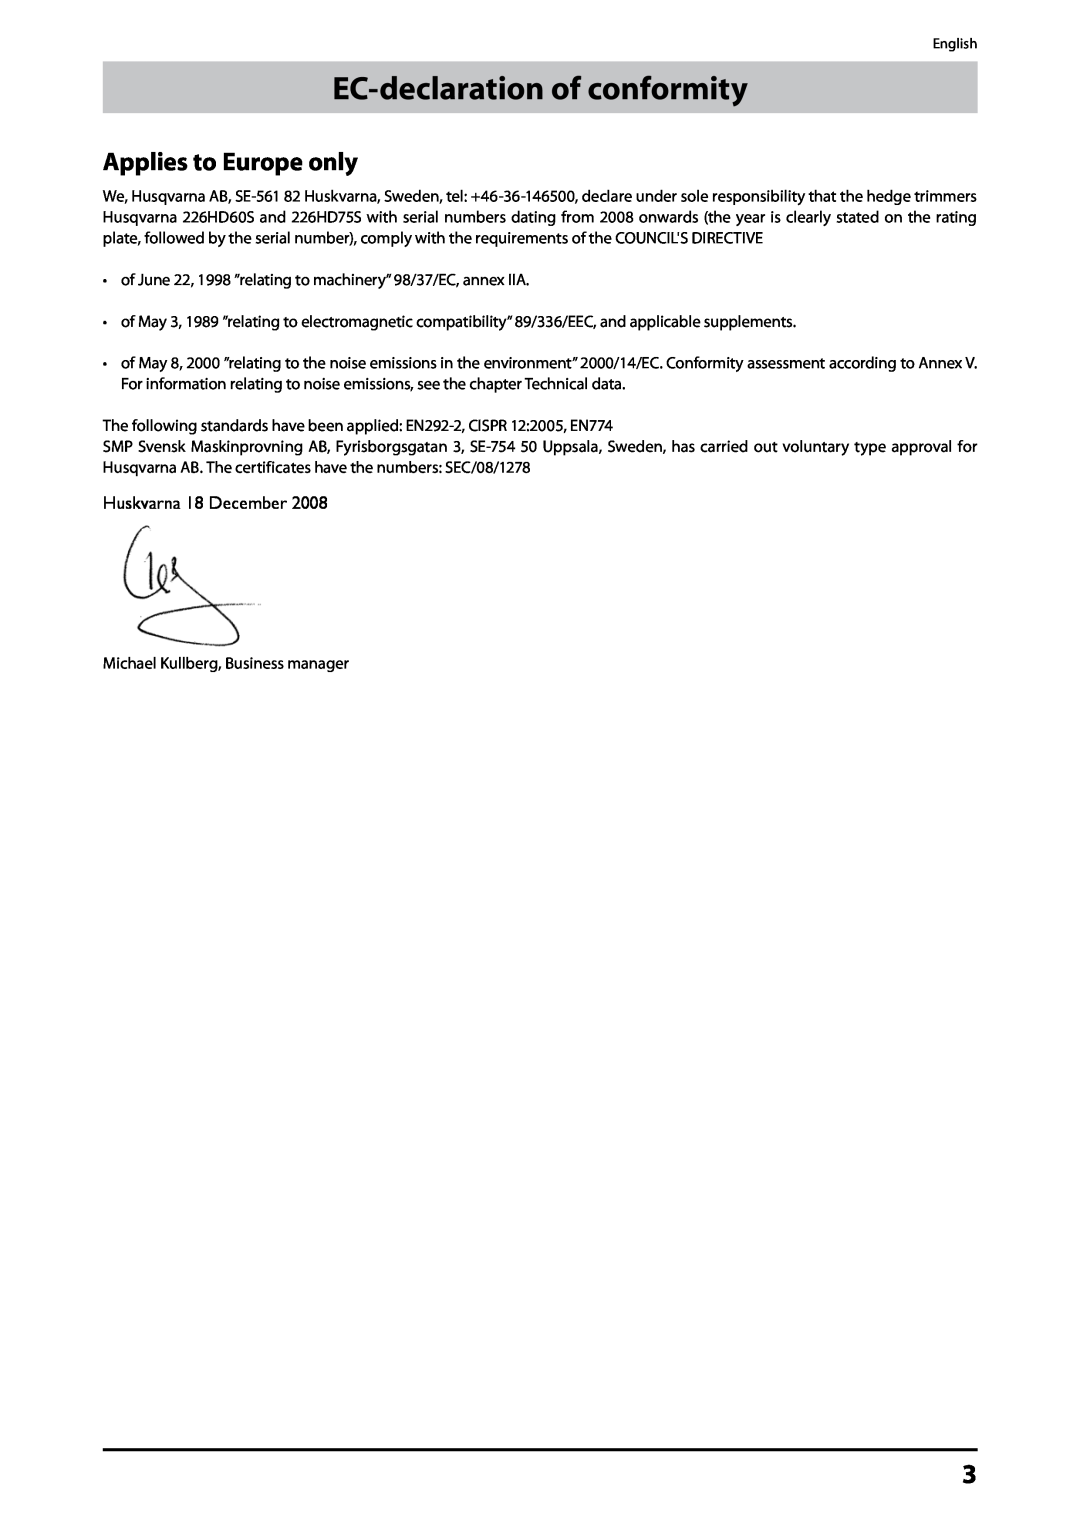 Husqvarna 226HD60S, 226HD75S manual EC-declaration of conformity, Applies to Europe only, Huskvarna 18 December 